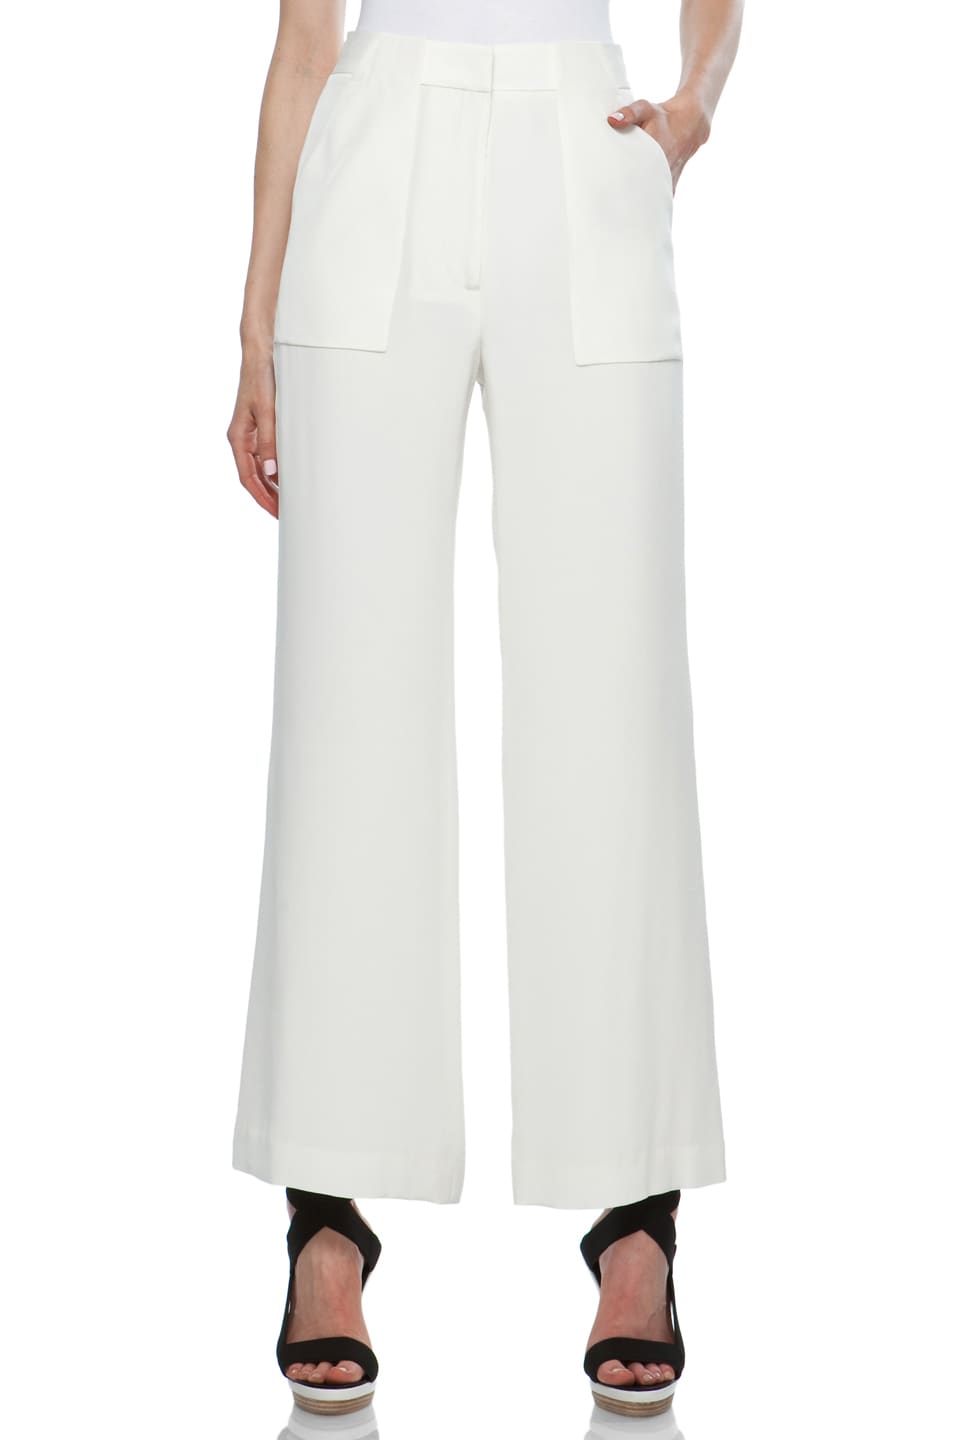 3.1 phillip lim Patch Pocket Trouser in Antique White | FWRD